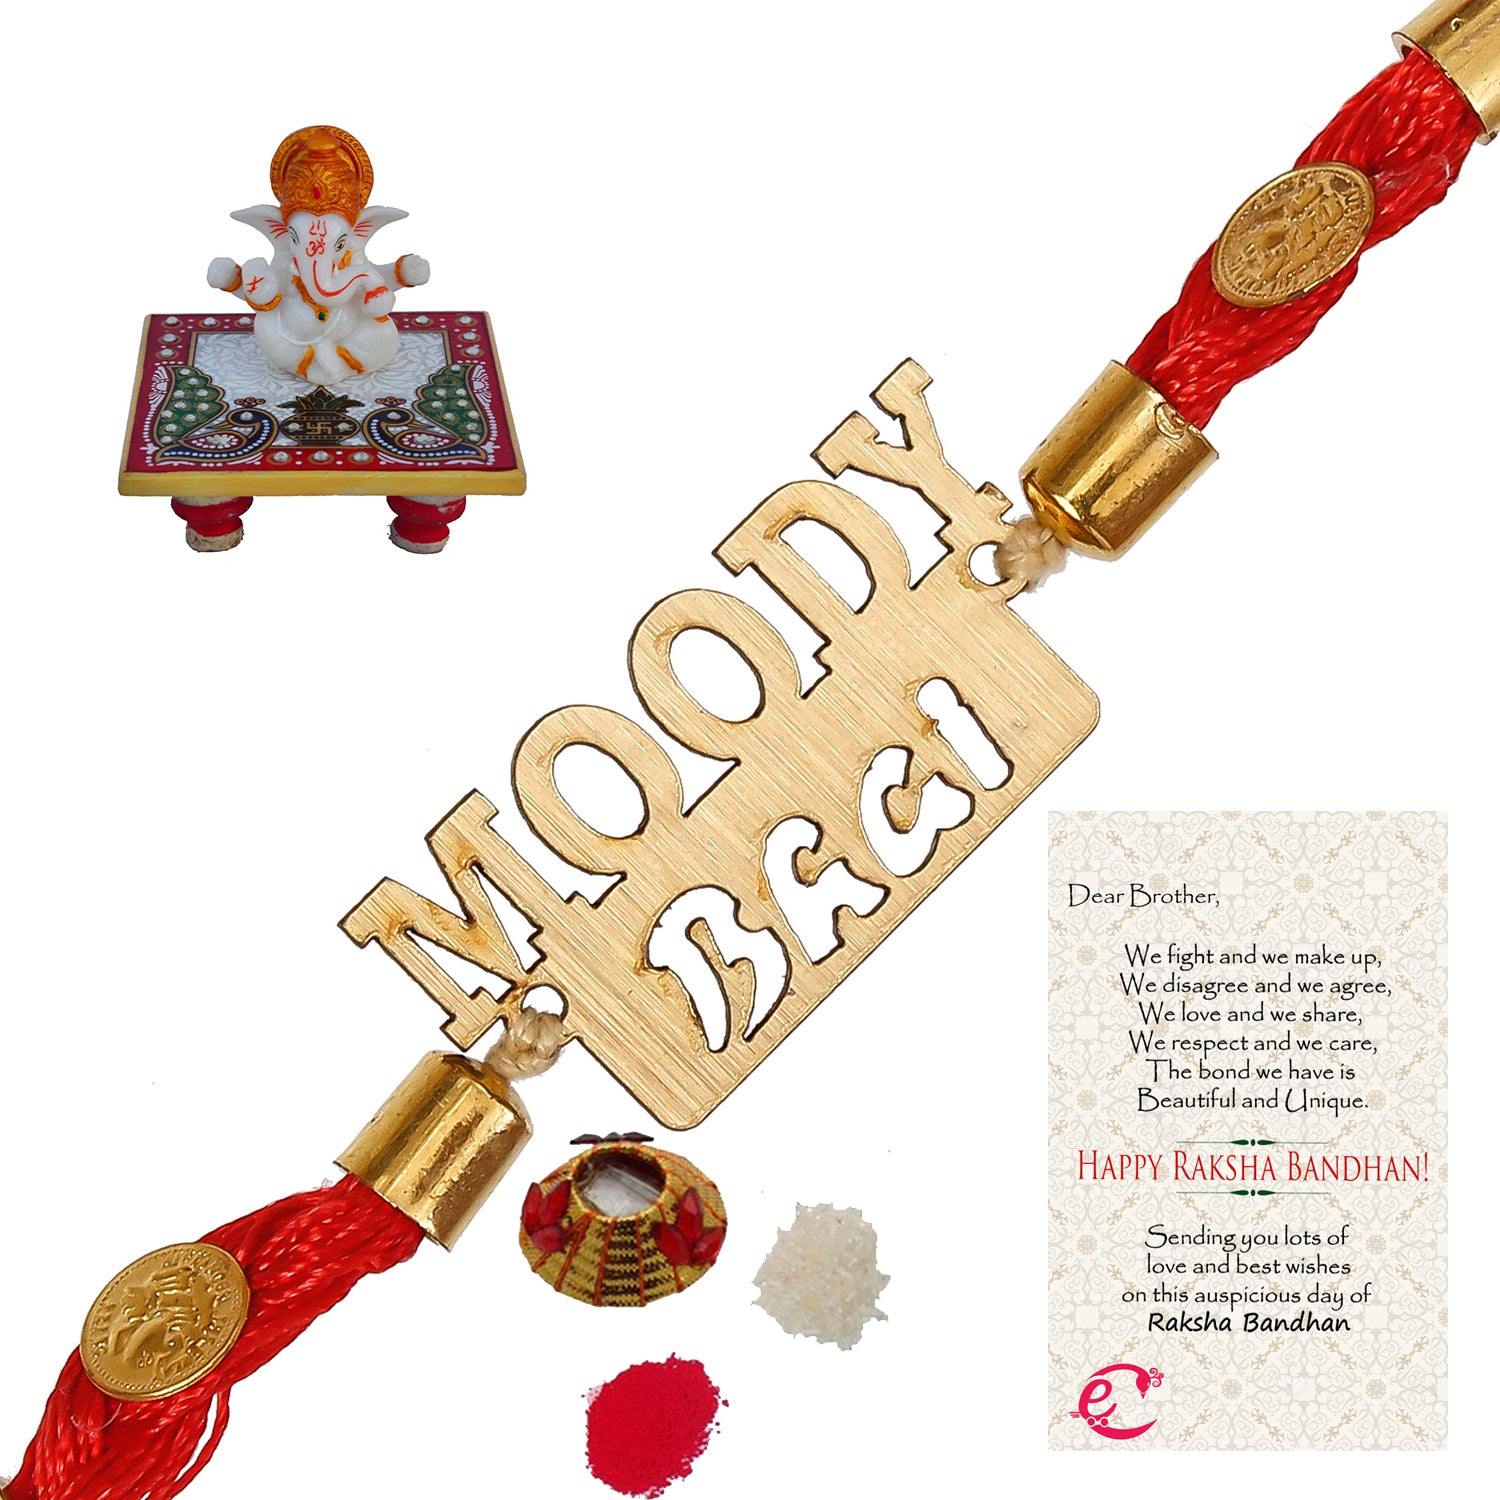 Designer Wooden Moddy Bhai Rakhi with Lord Ganesha Marble Chowki and Roli Tikka Matki, Best Wishes Greeting Card